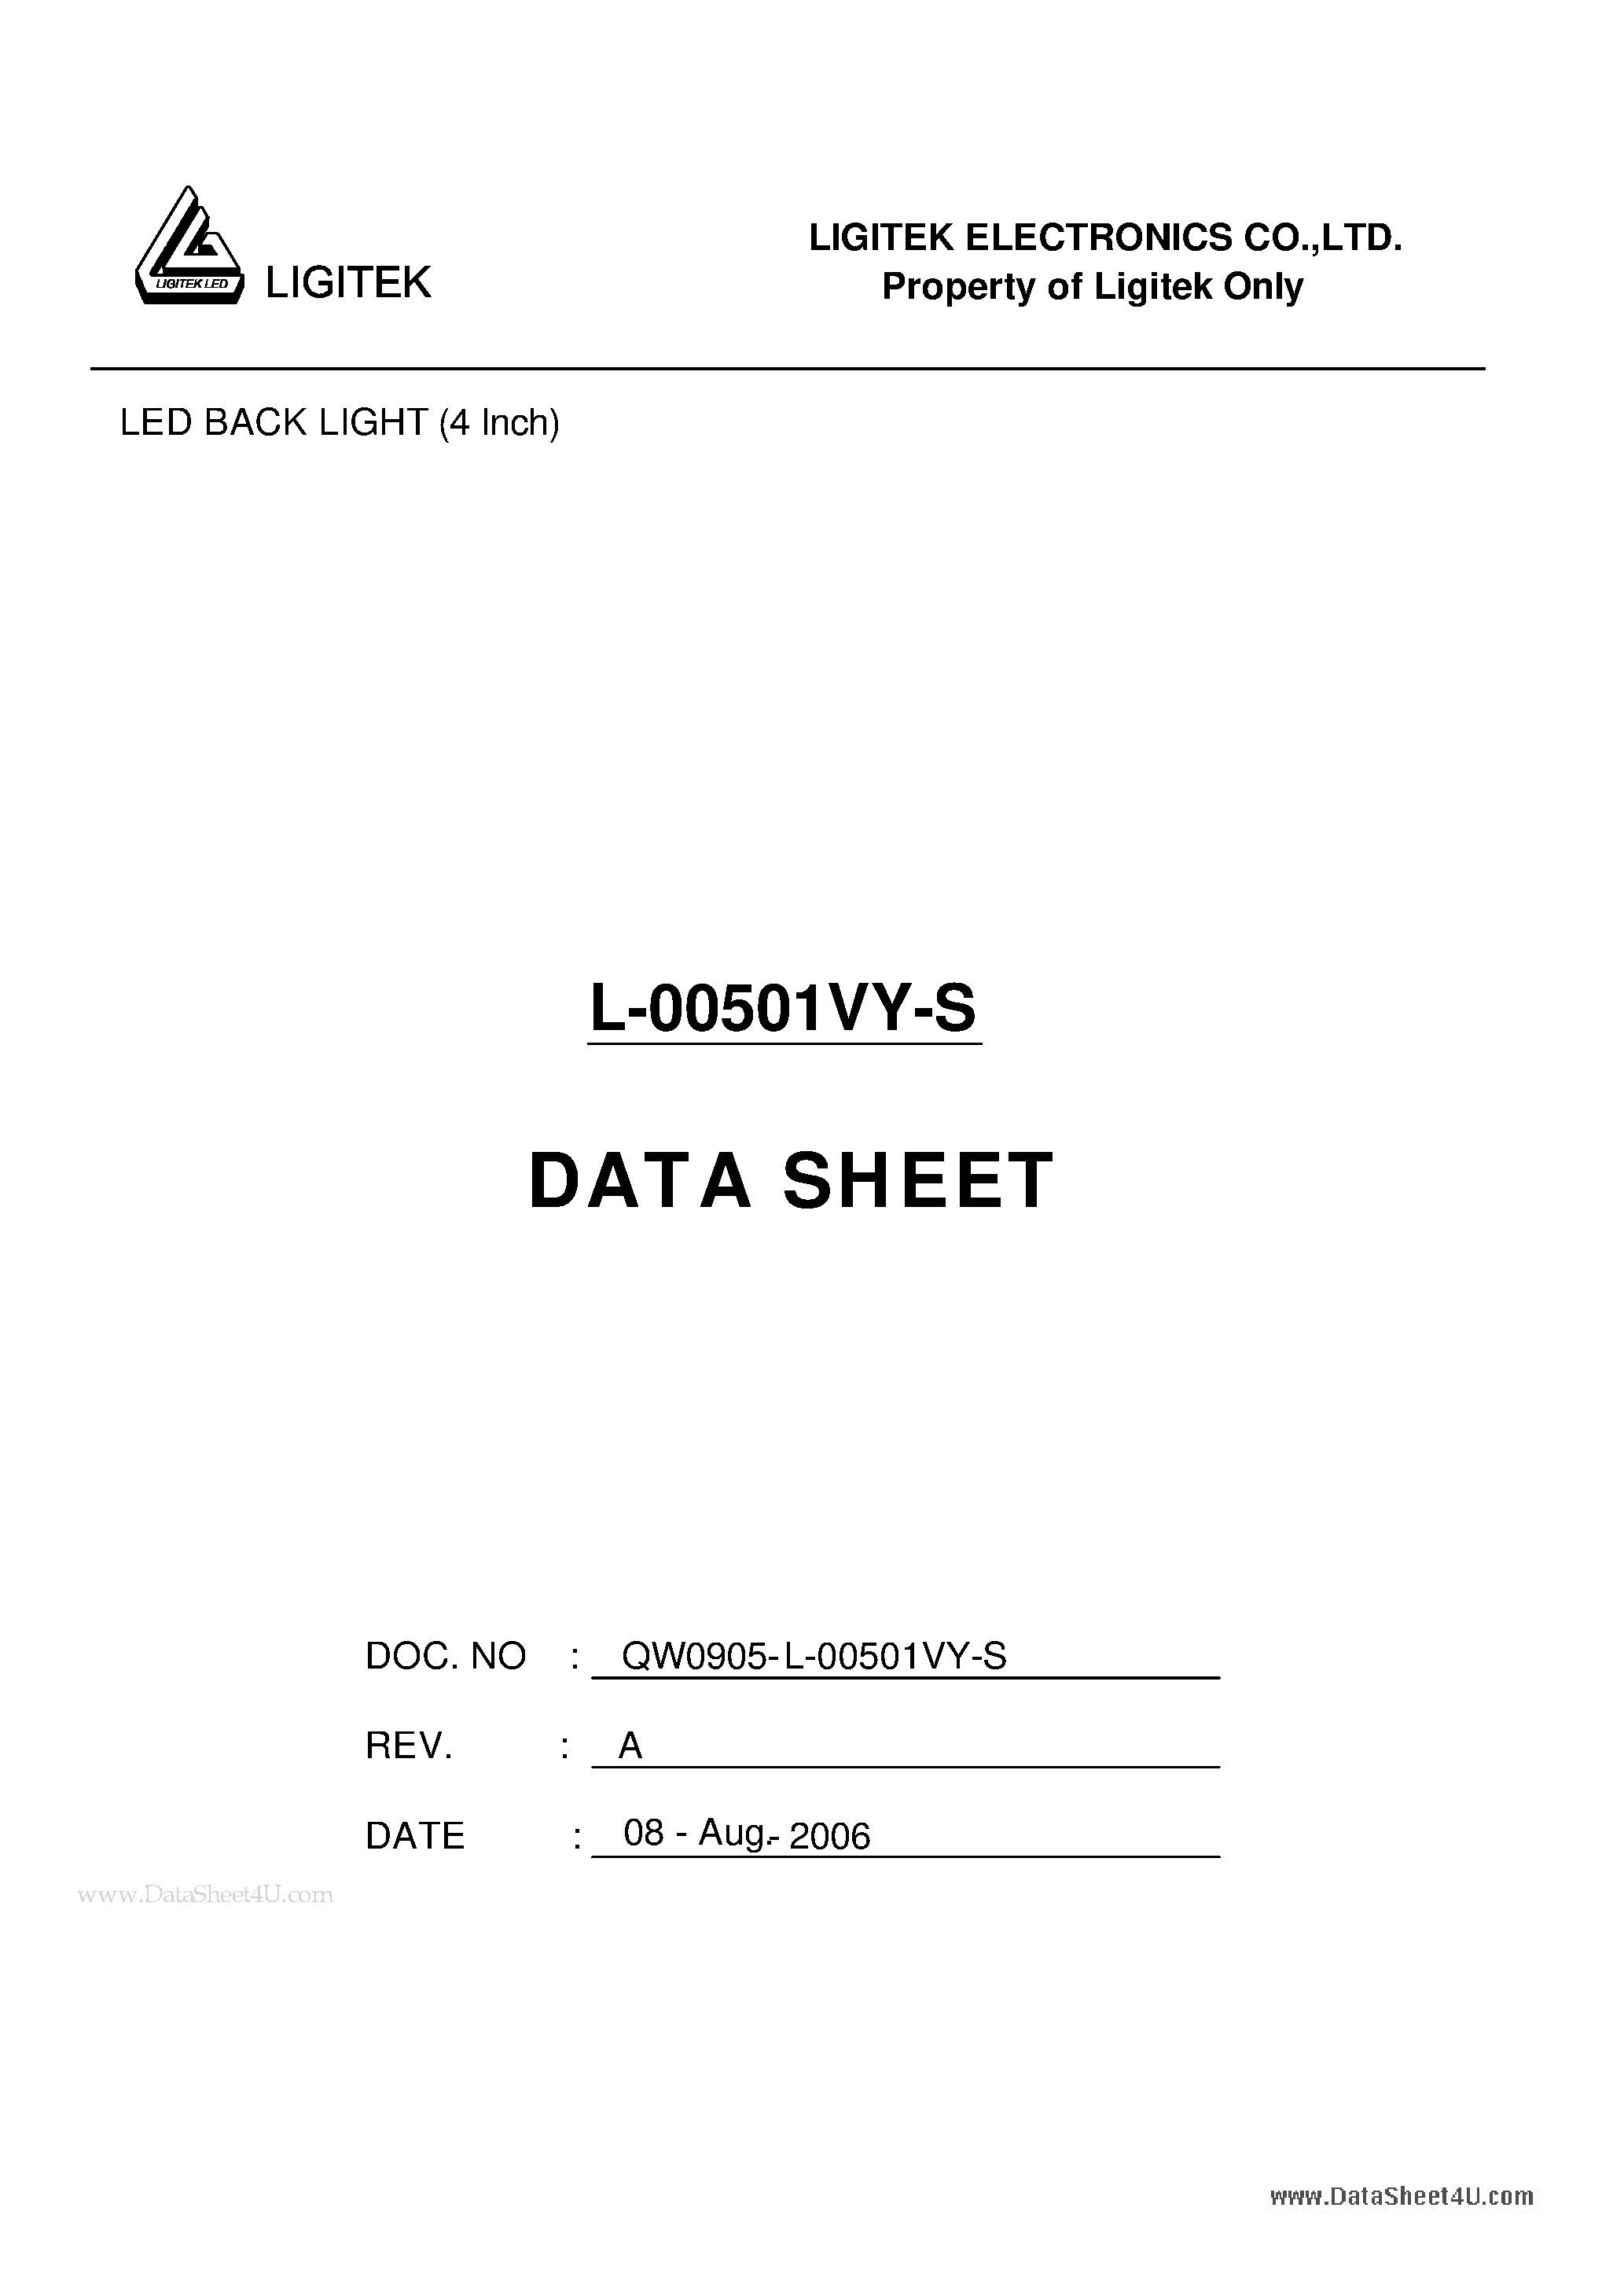 Datasheet L-00501VY-S - LED BACK LIGHT (4 Inch) page 1